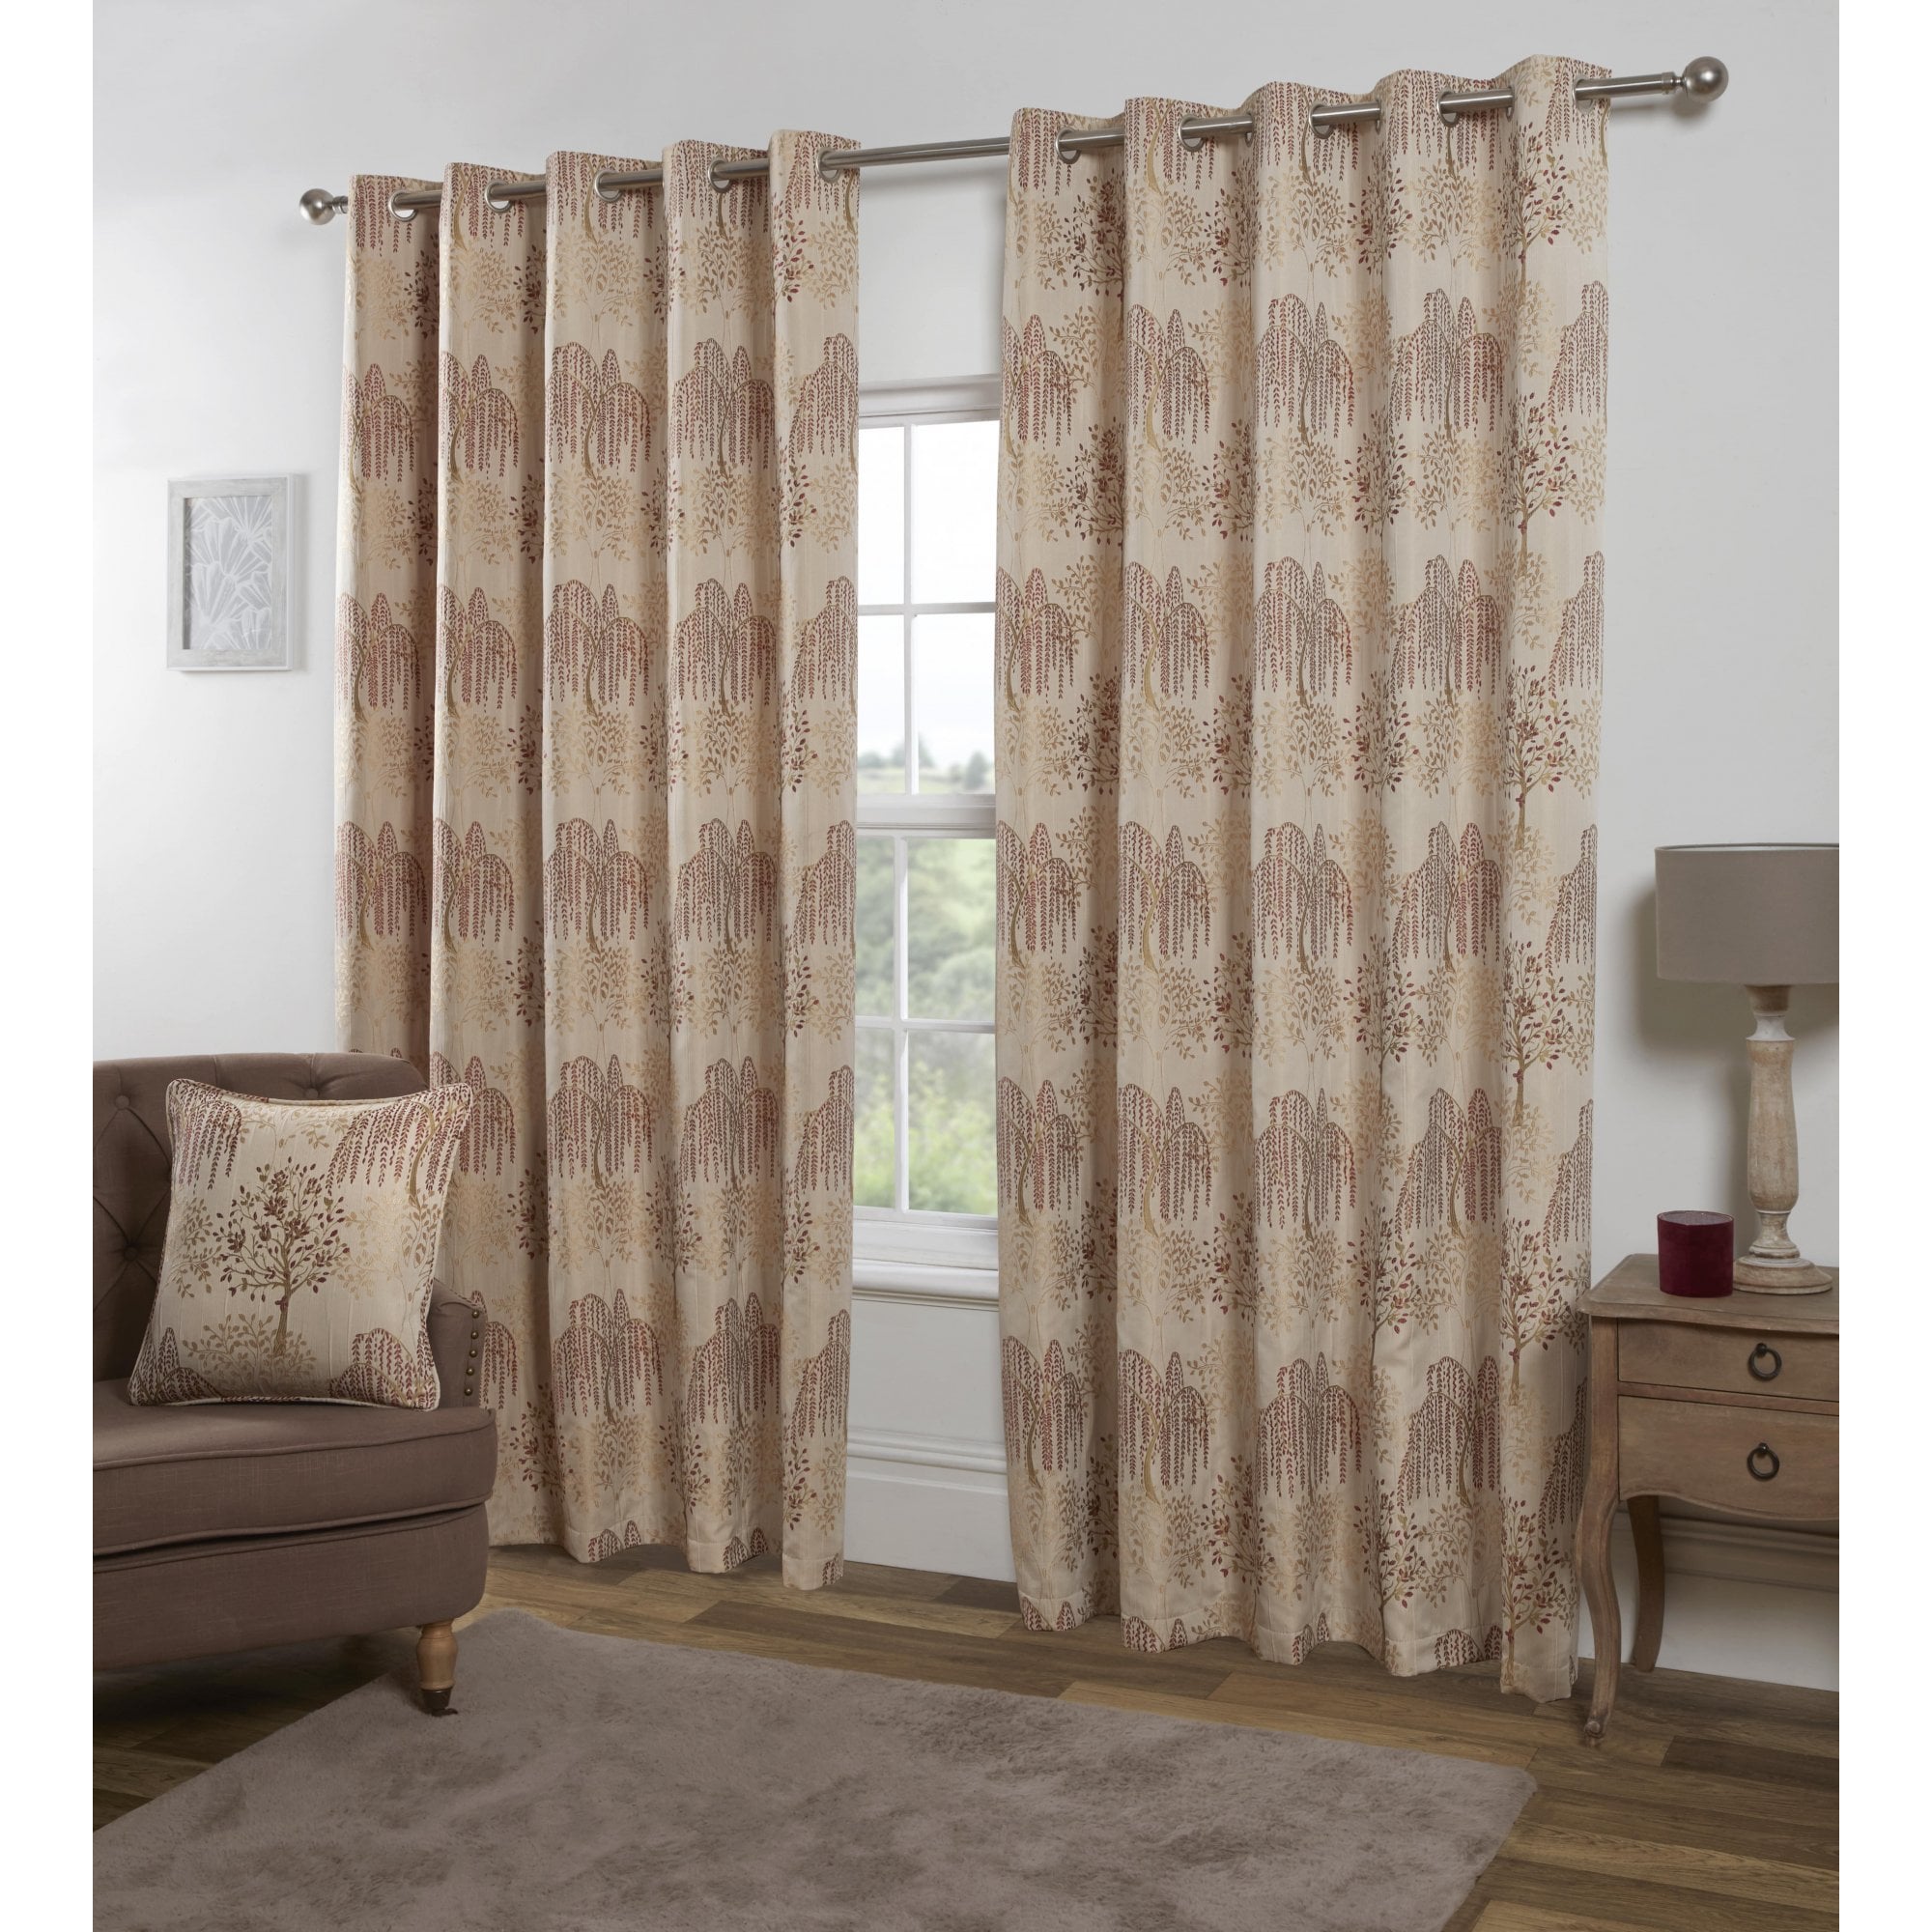 Orchard Patterned Eyelet Curtains - 117cm (46") X 137cm (54") - TJ Hughes